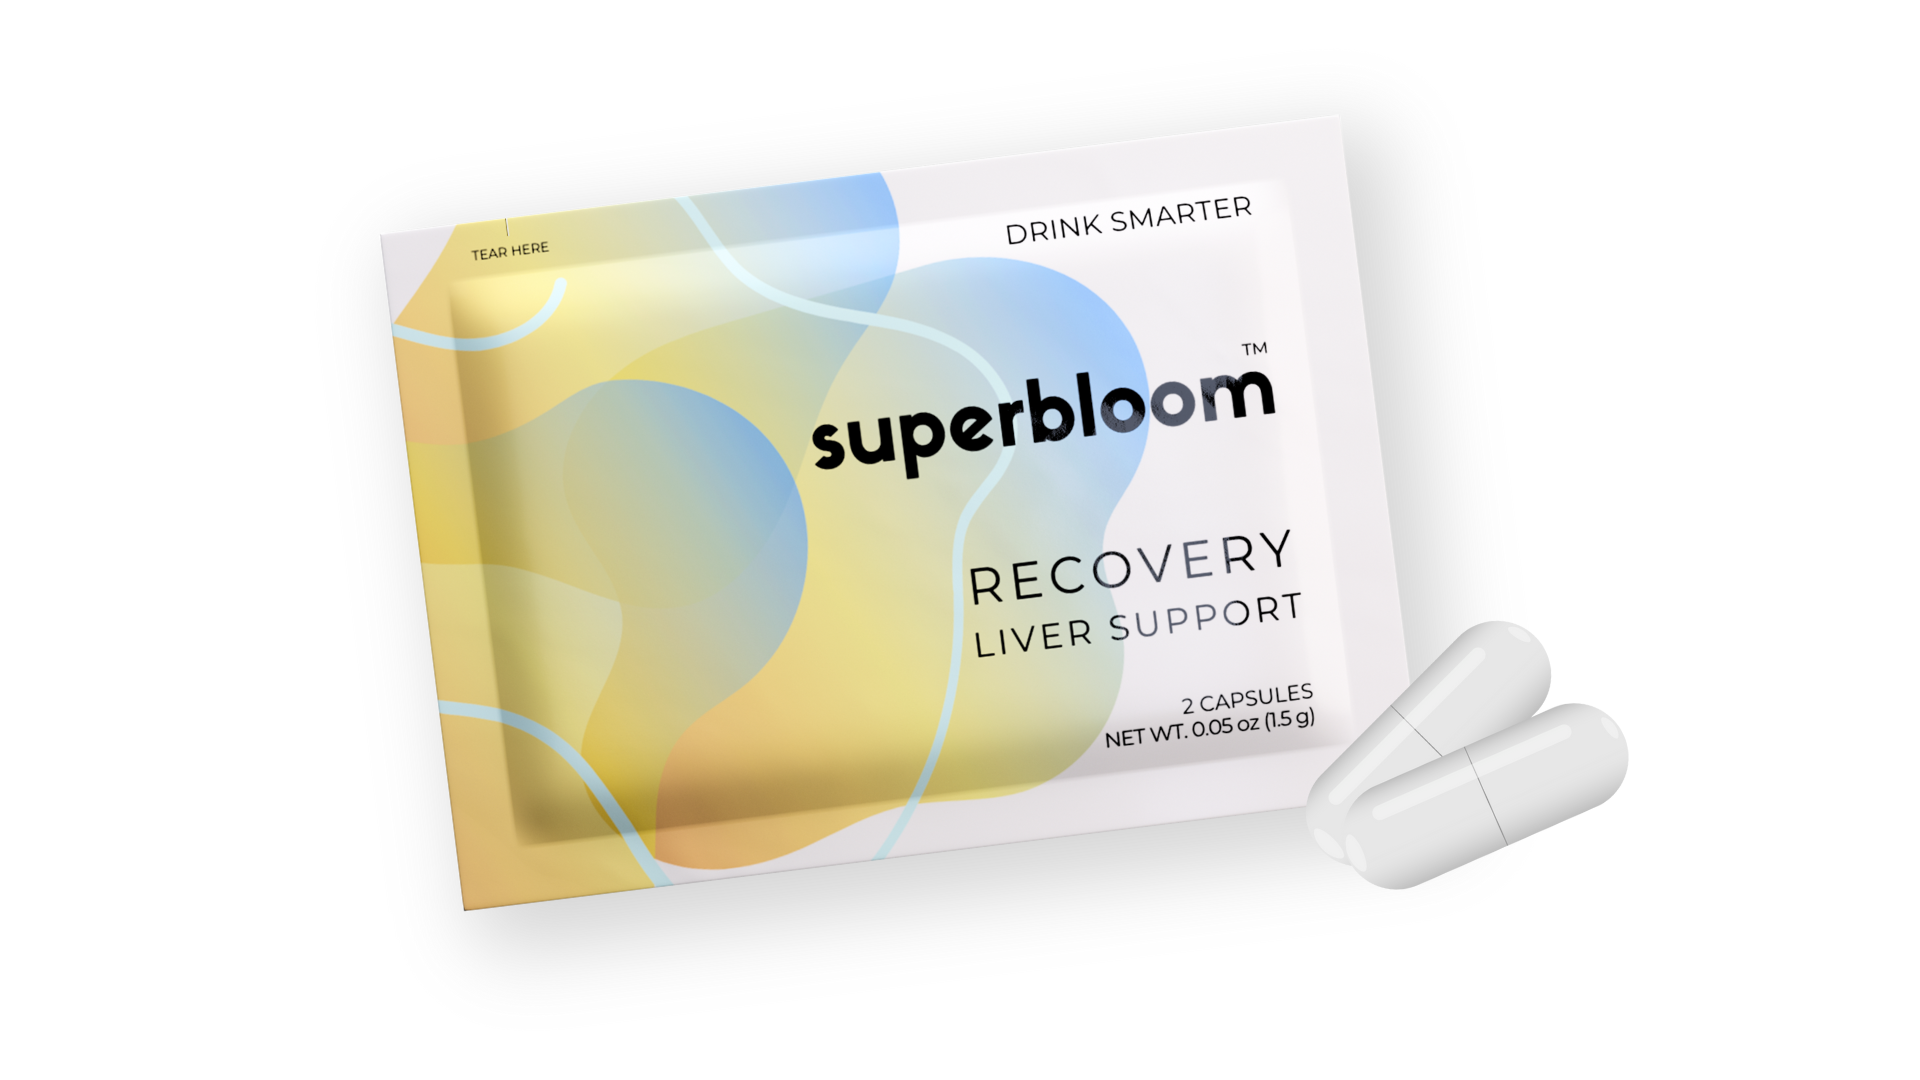 Superbloom Helps Reduce Symptoms Post Drinking*